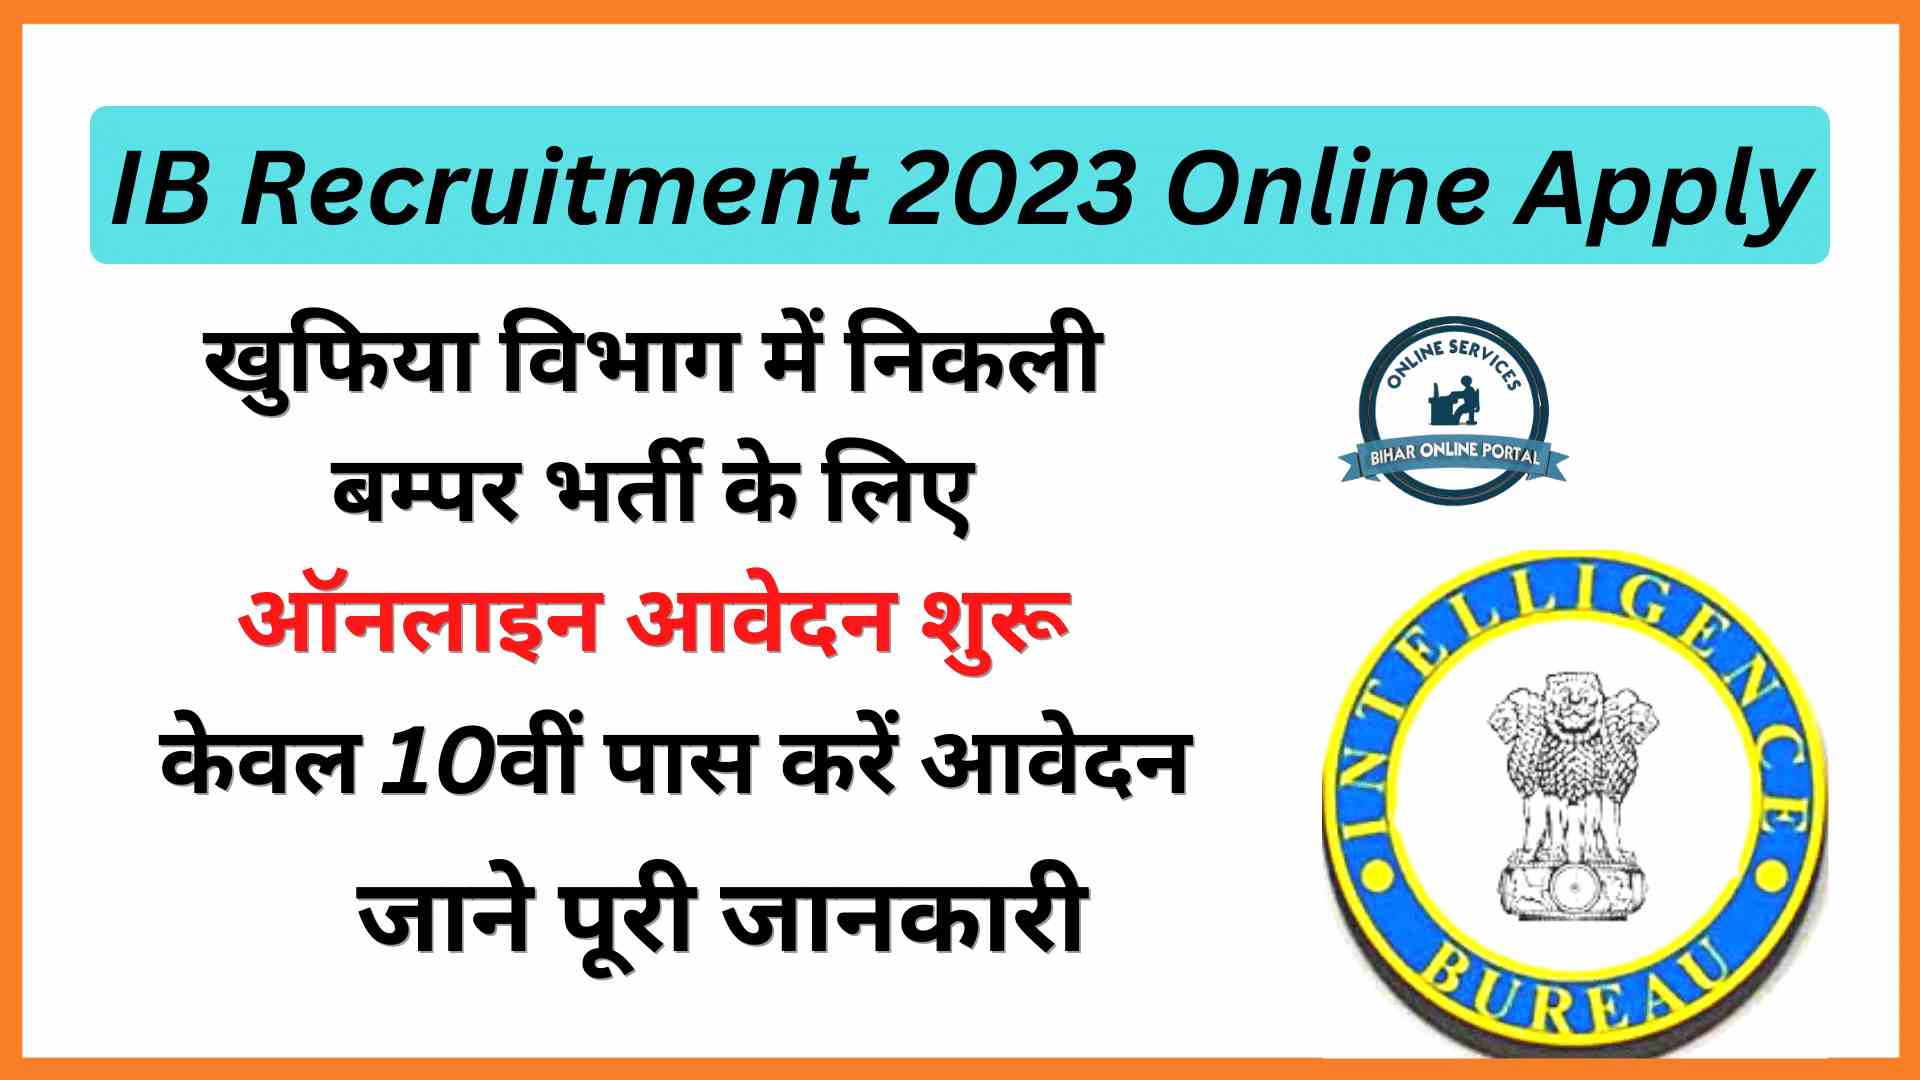 IB Recruitment 2023 Online Apply